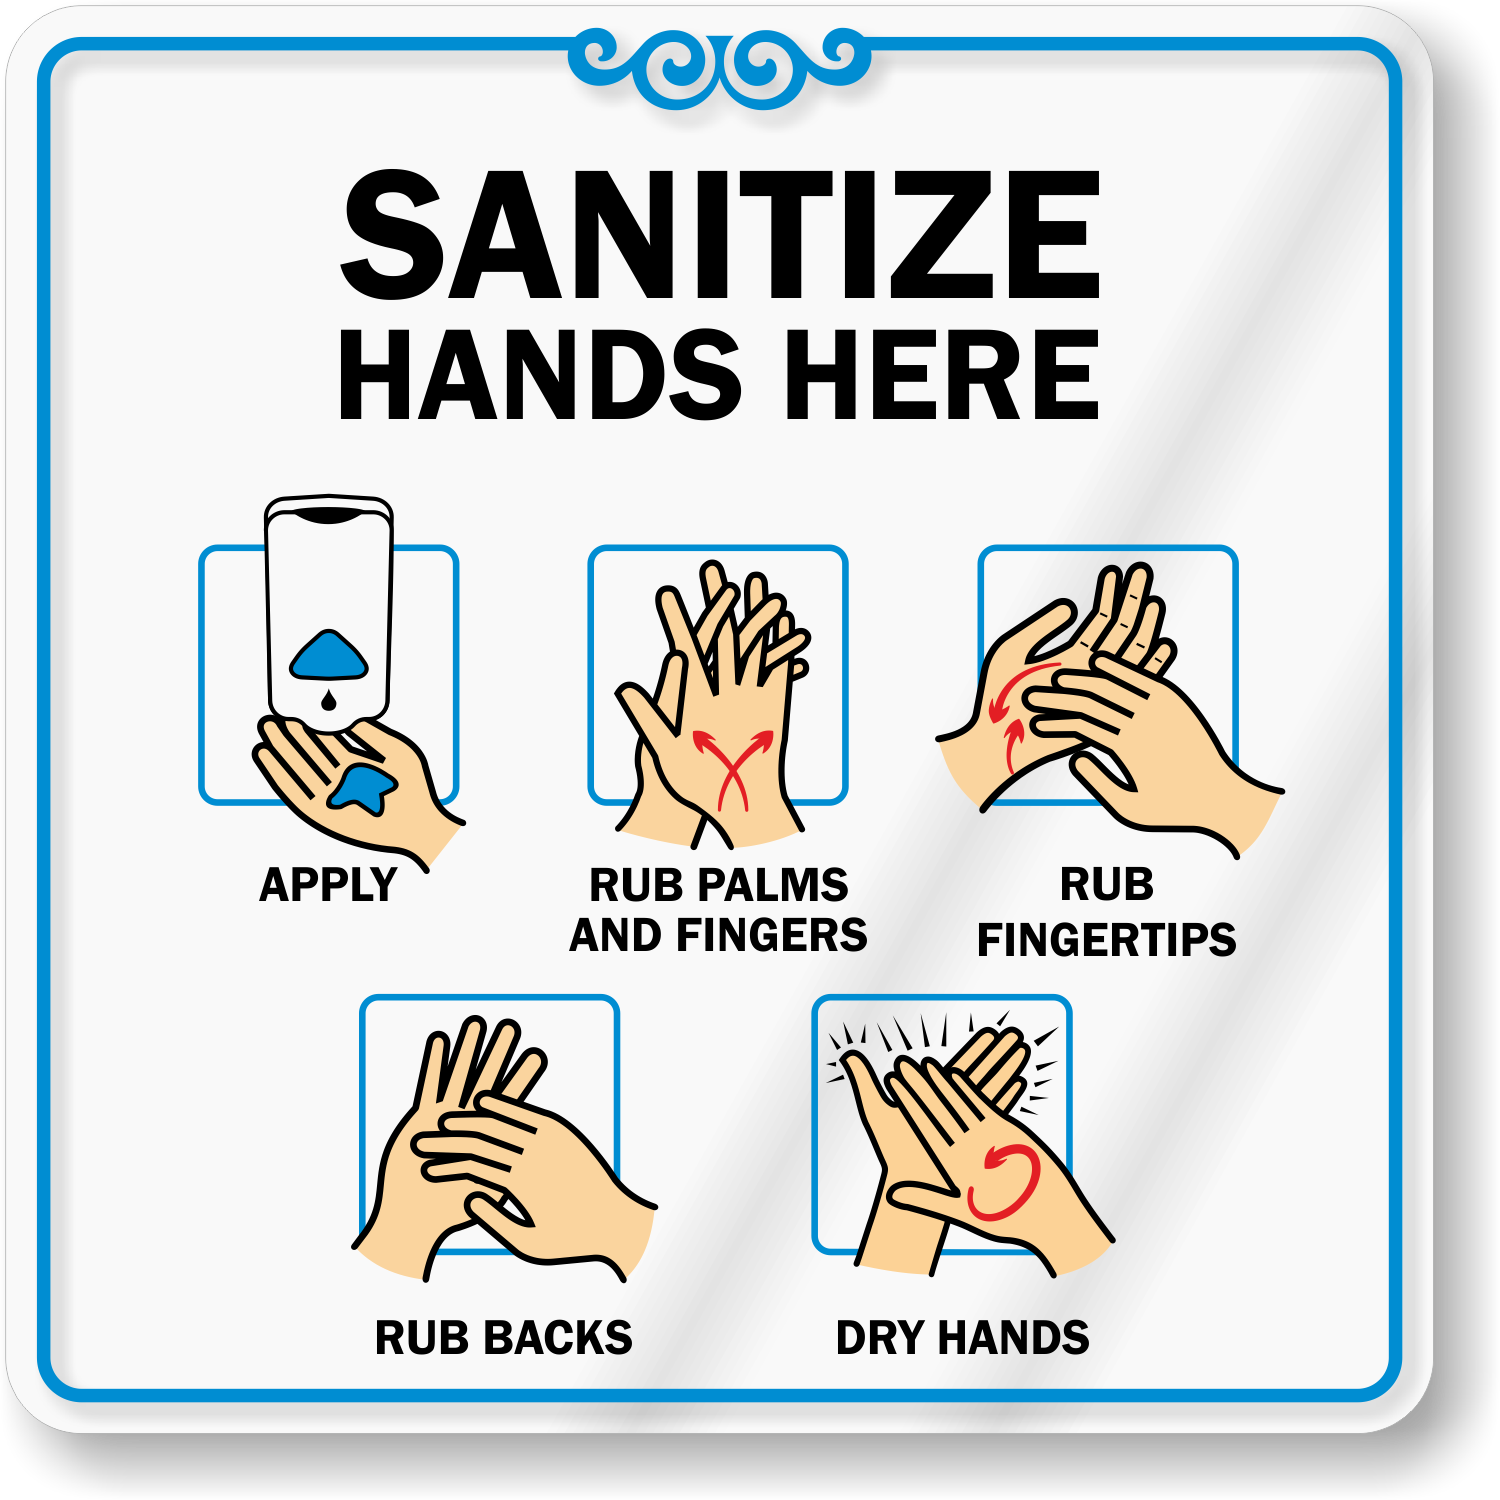 use hand sanitizer sign pdf